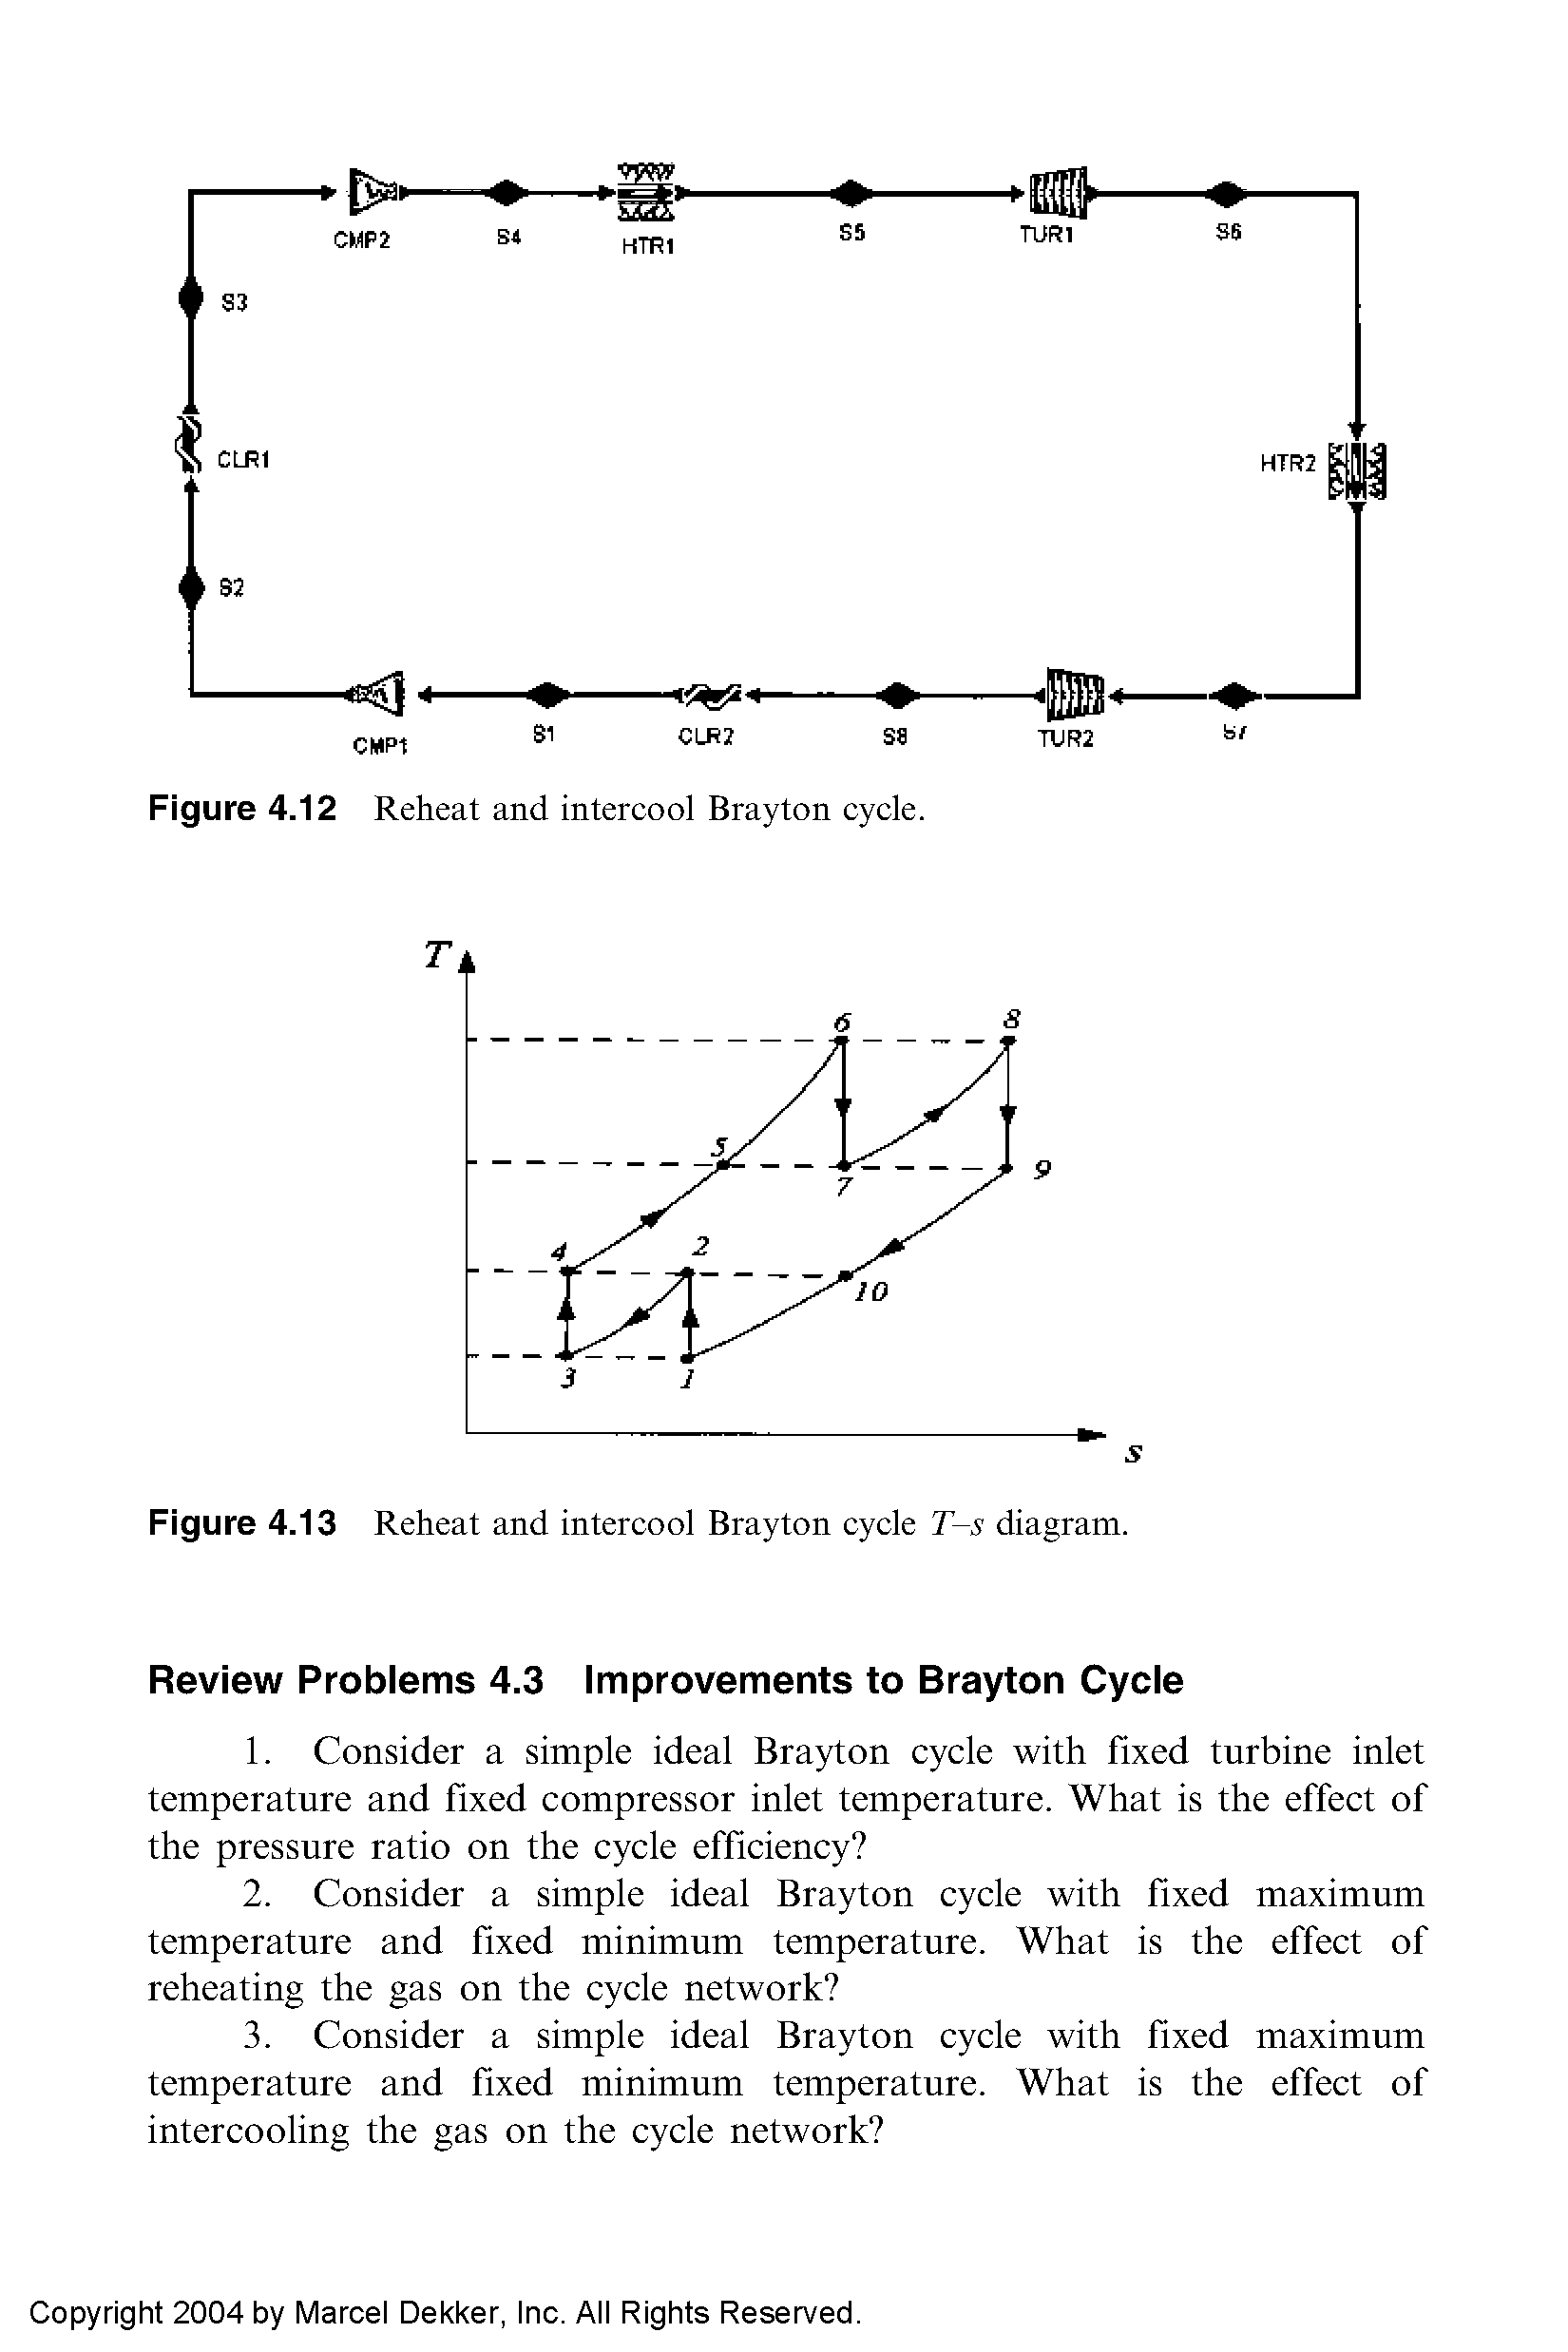 Figure 4.13 Reheat and intercool Brayton cycle T-s diagram.